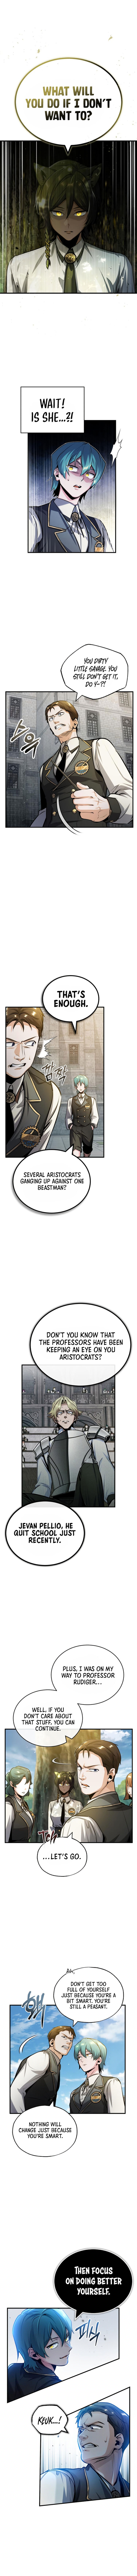 Academys Undercover Professor 56 1